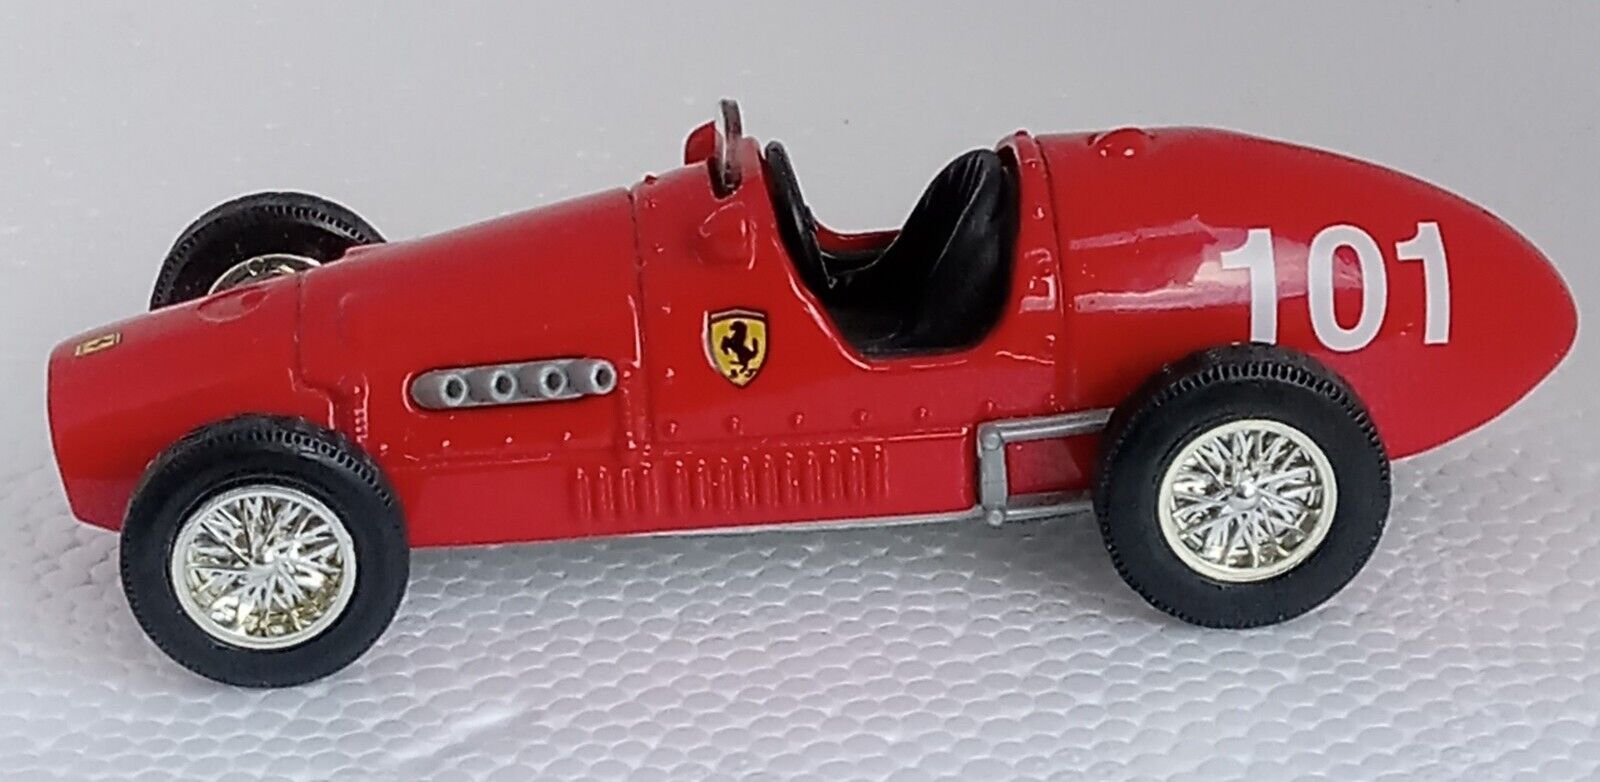 ferrari 1952 500 F2 red diecast 1/35 Rare Pull Back Race Car # 101 Red Body